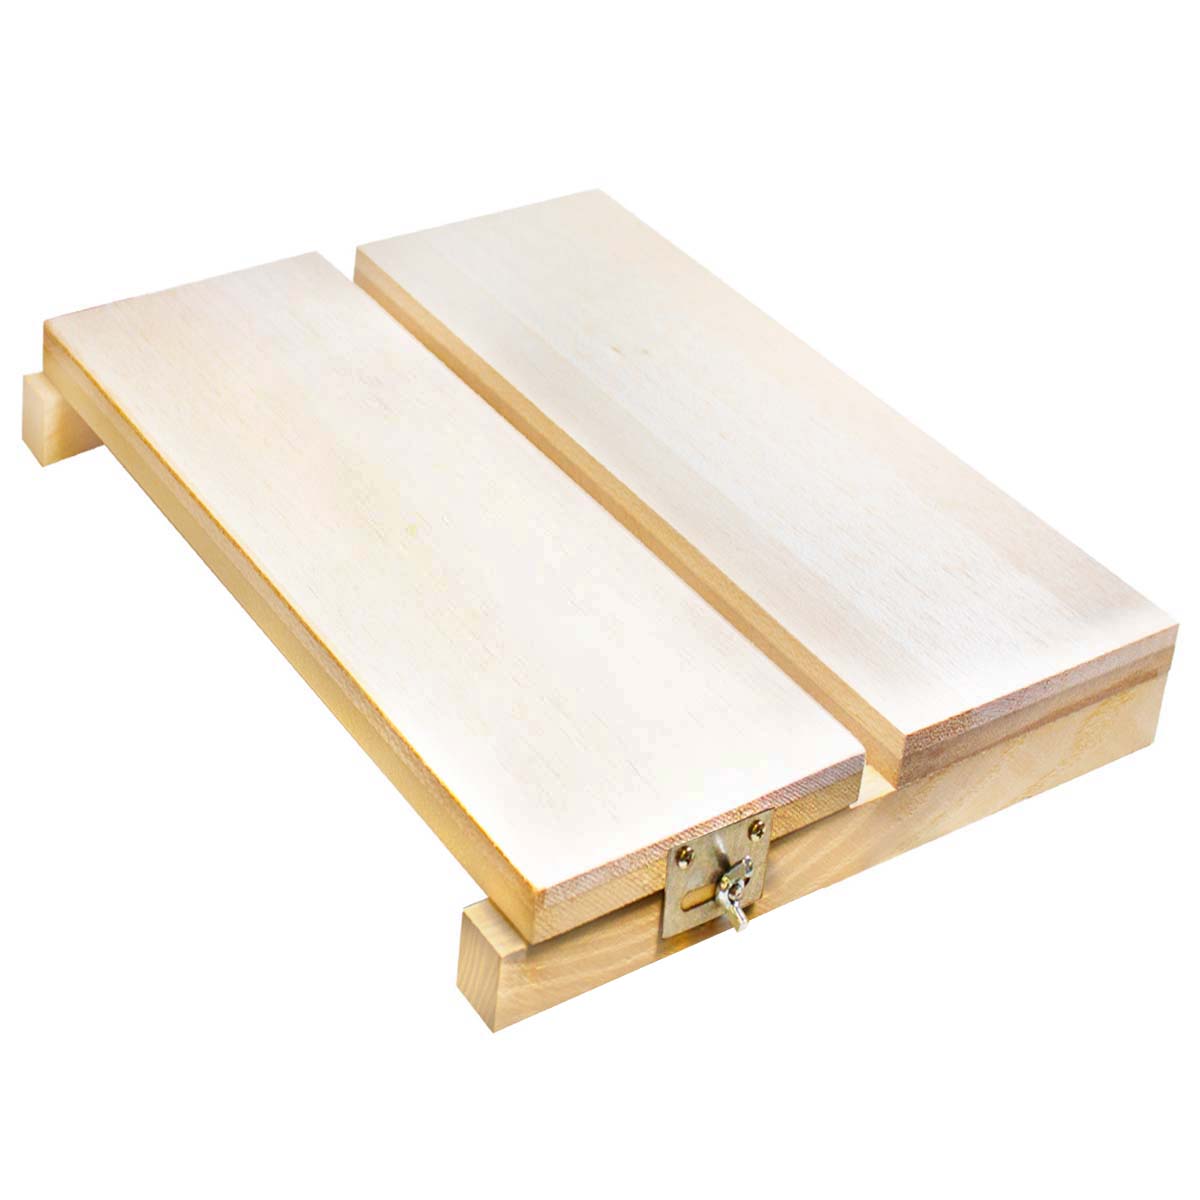 Adjustable Flat Spreading Boards